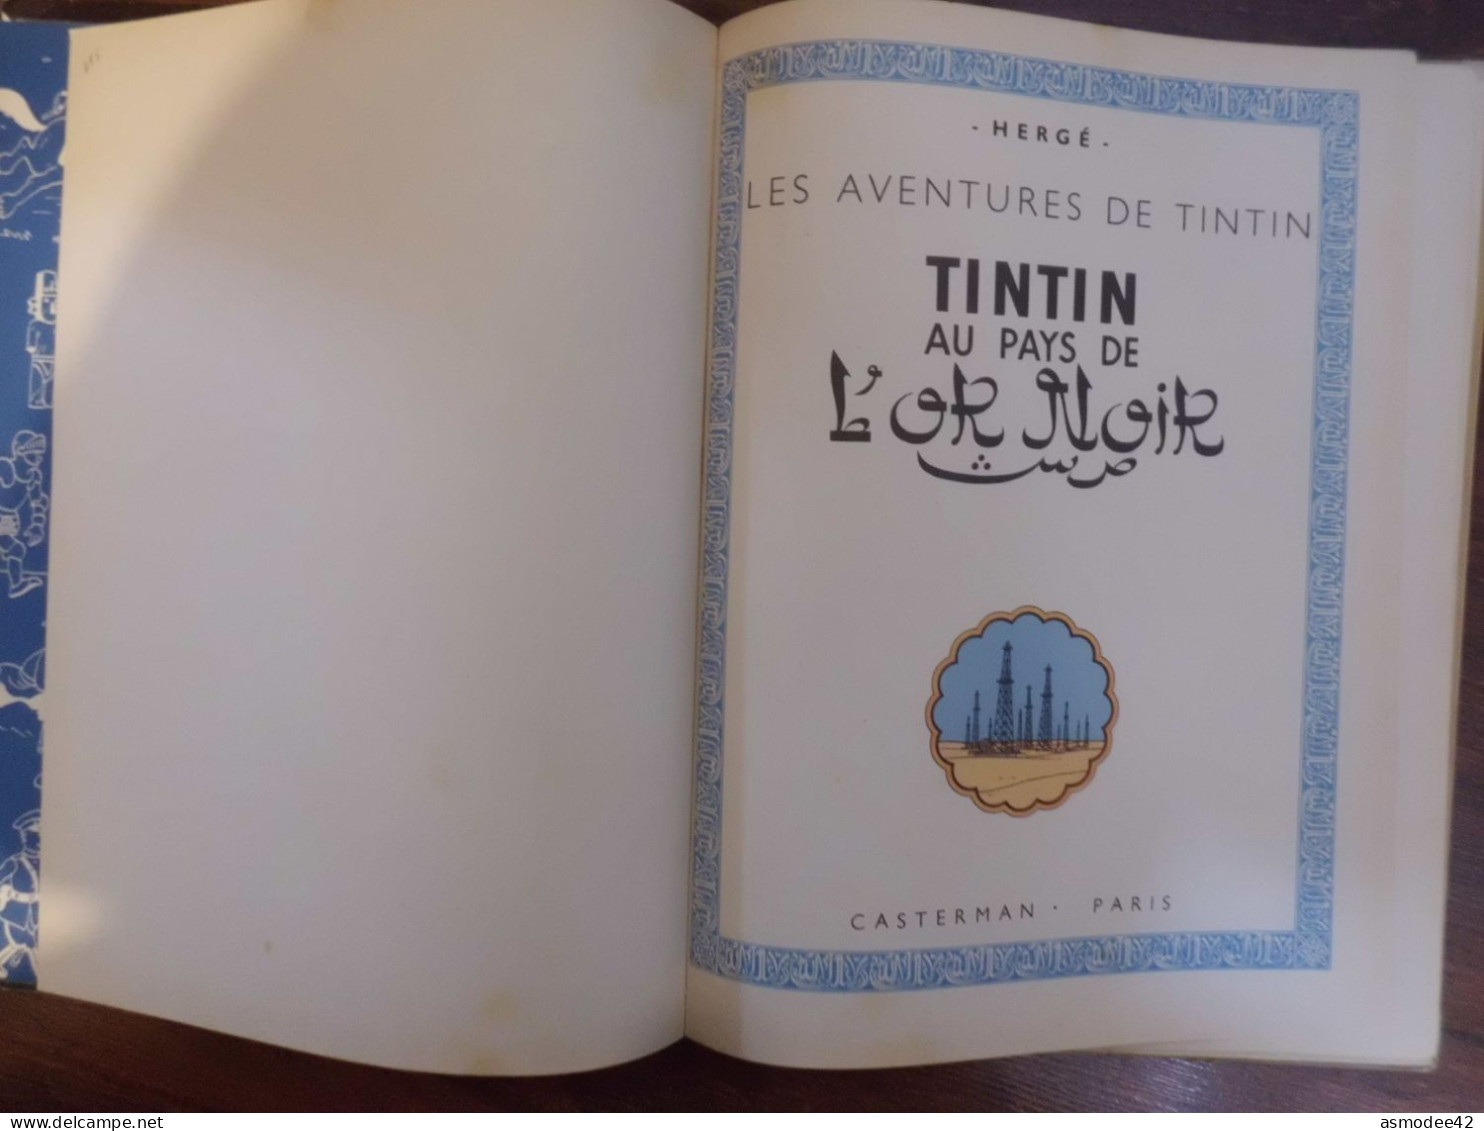 TINTIN  AU PAYS DE L OR NOIR  1950   ETAT MOYEN INTERIEUR FRAIS - Tintin